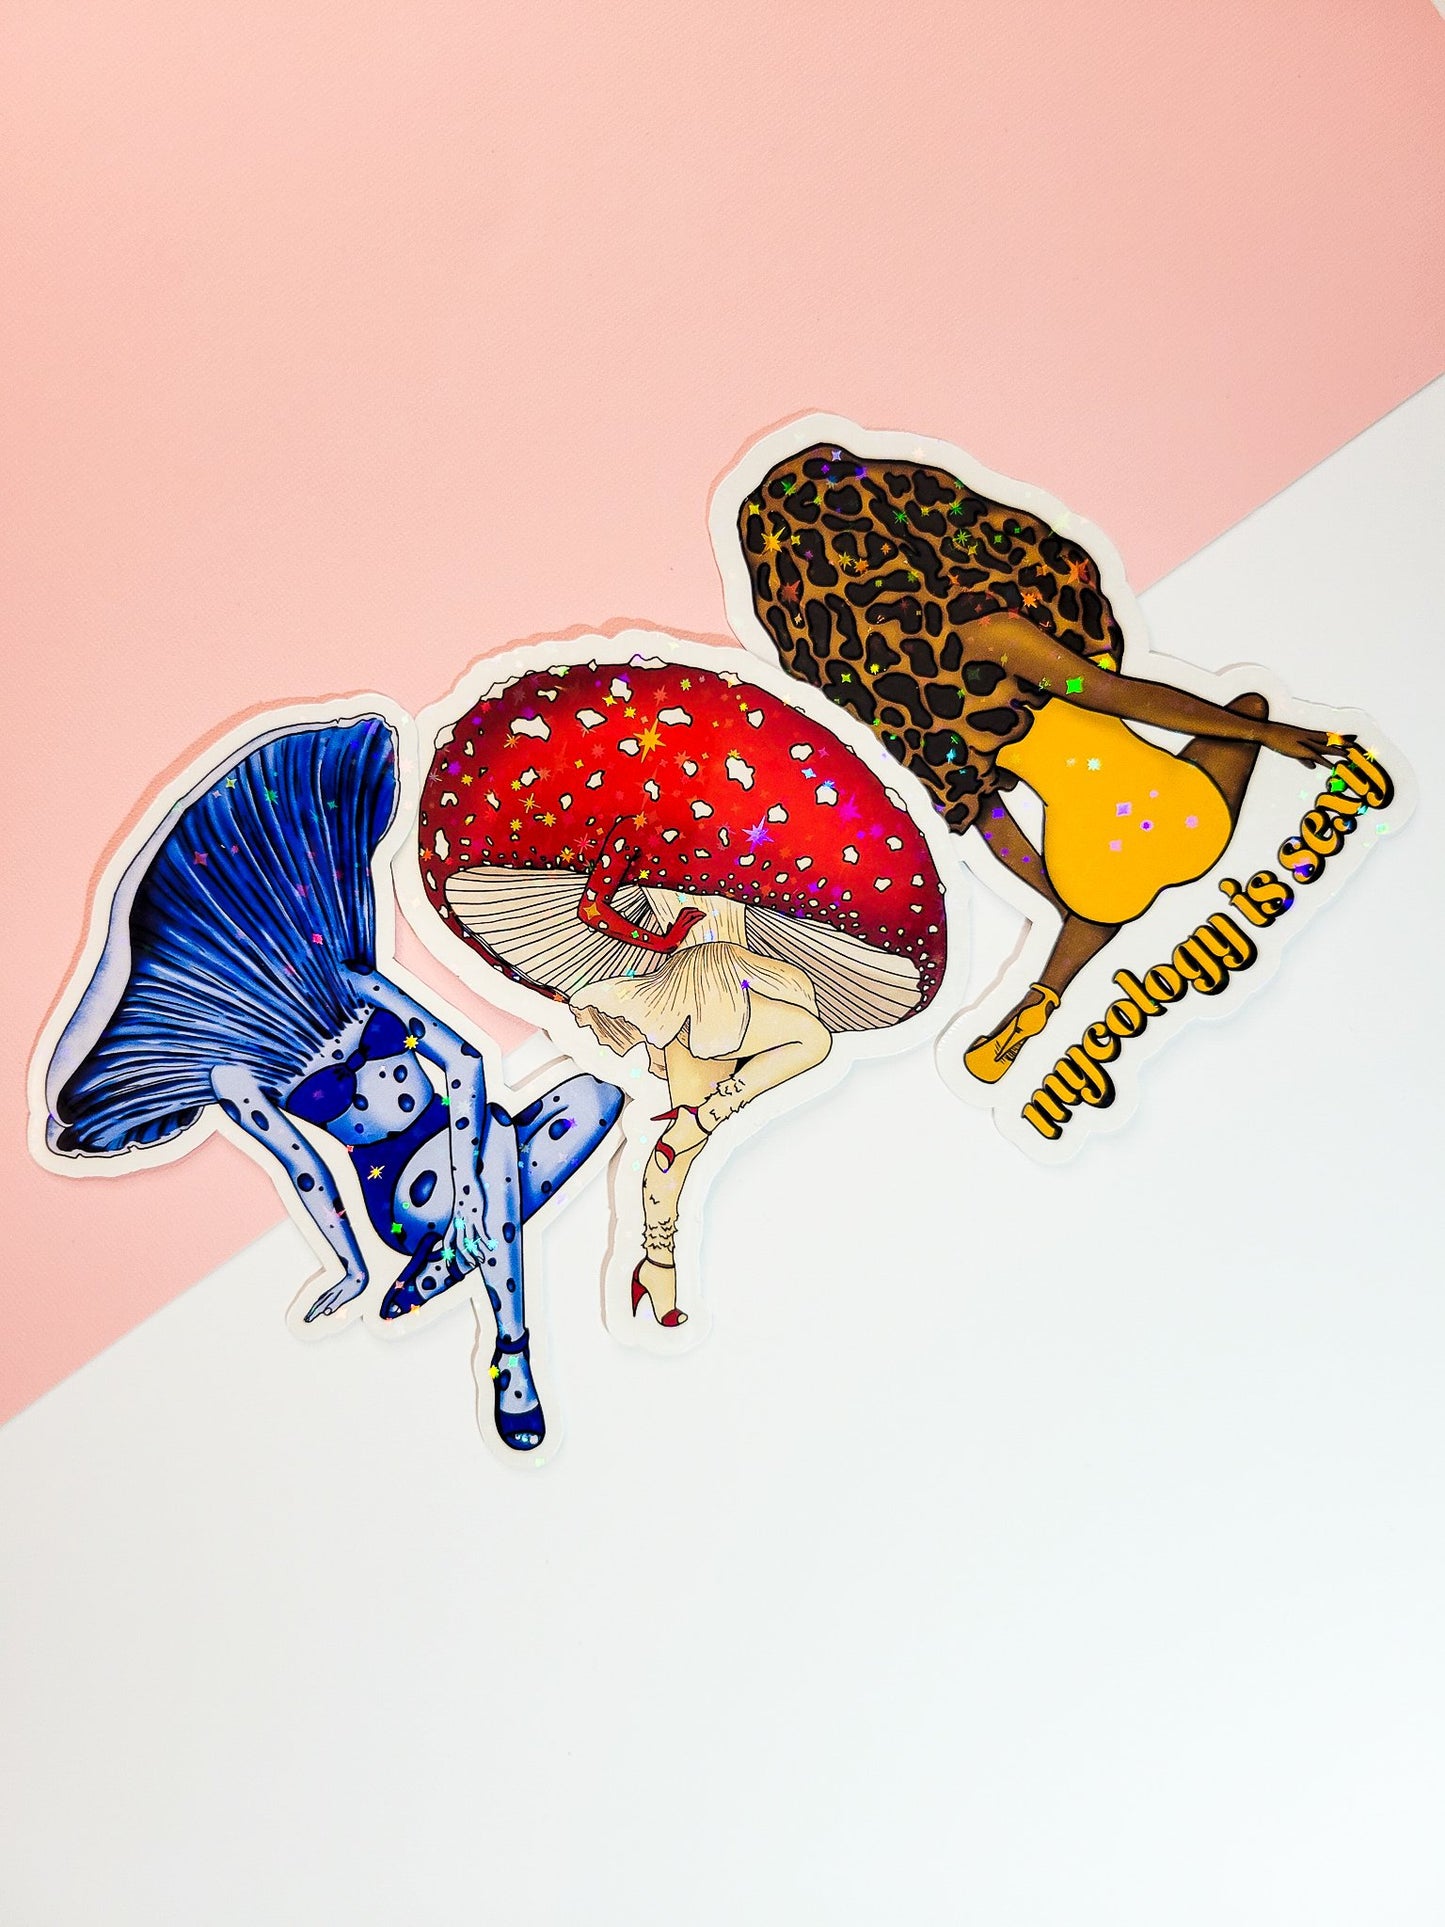 The Tantalizing Trio | Set of 3 Mushroom Stickers | Sexy Mushroom Pinup Girls